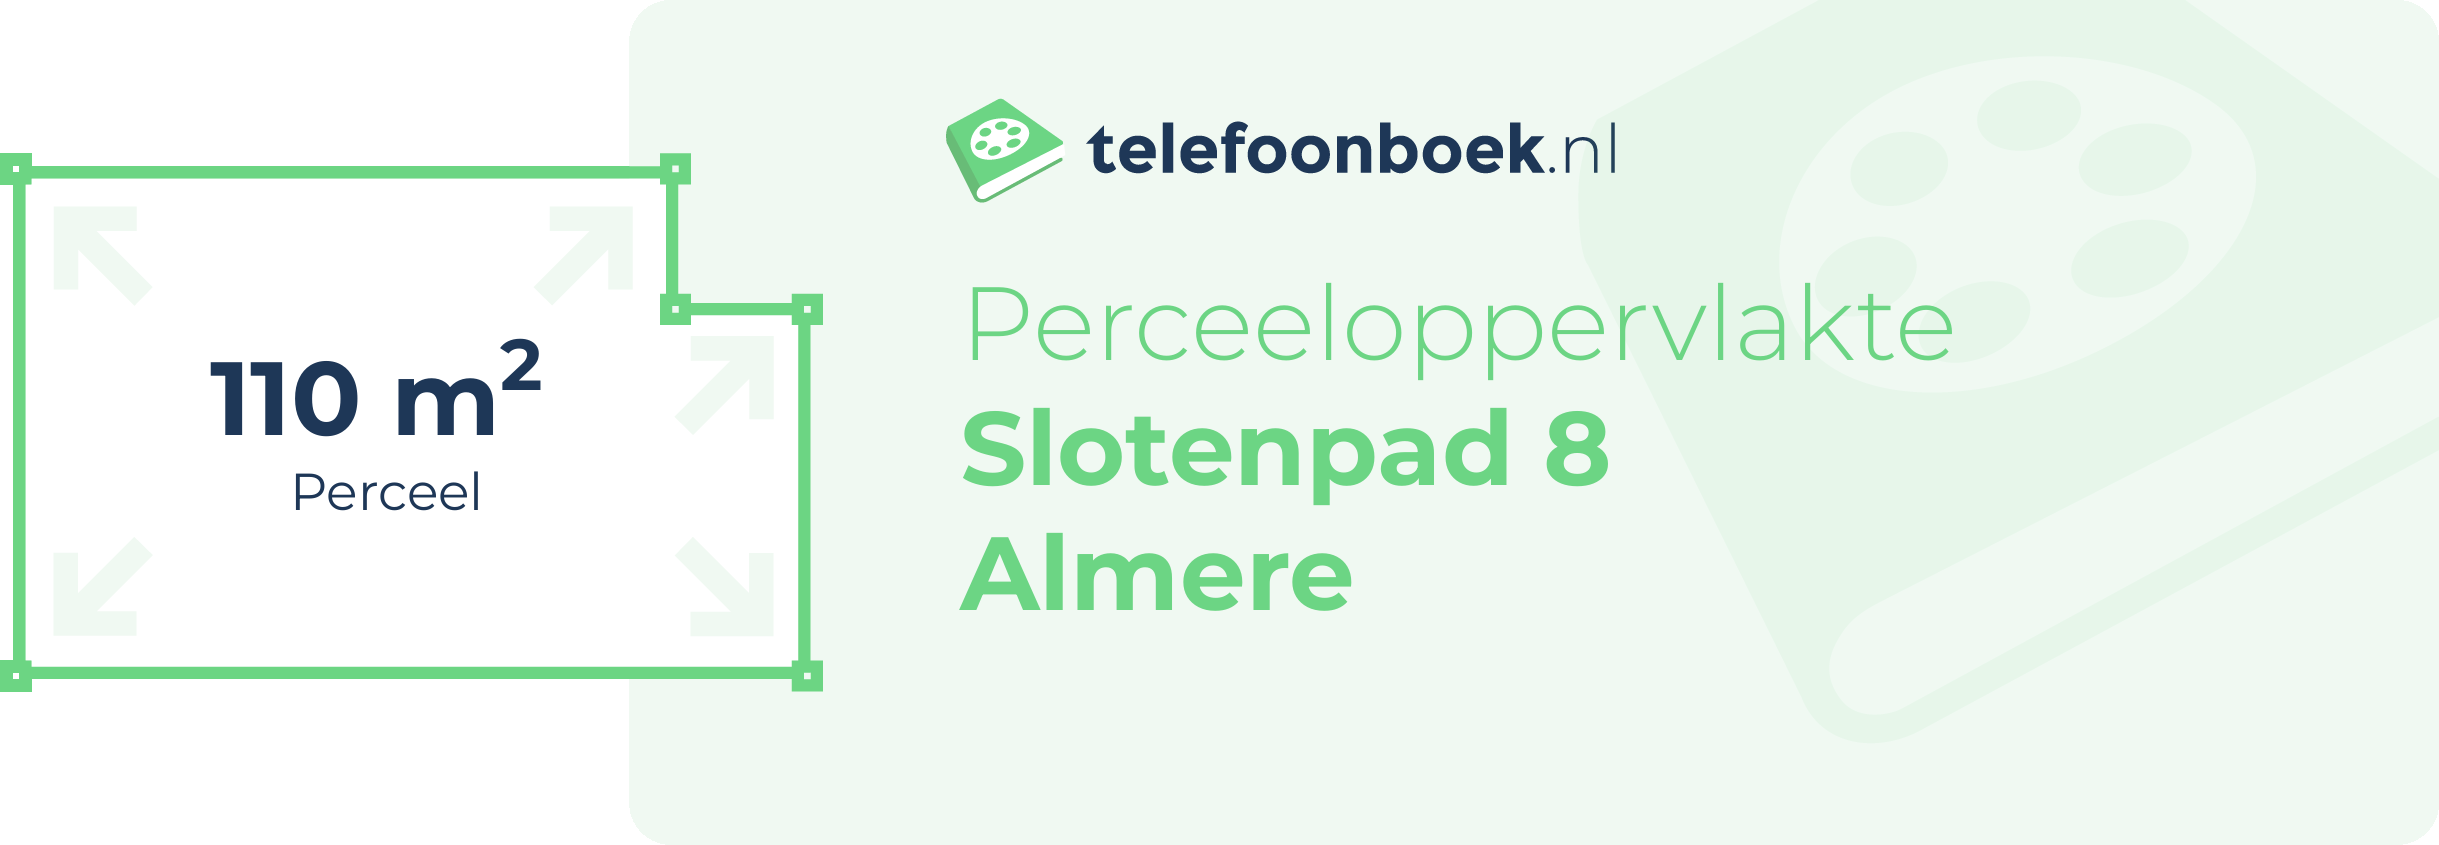 Perceeloppervlakte Slotenpad 8 Almere